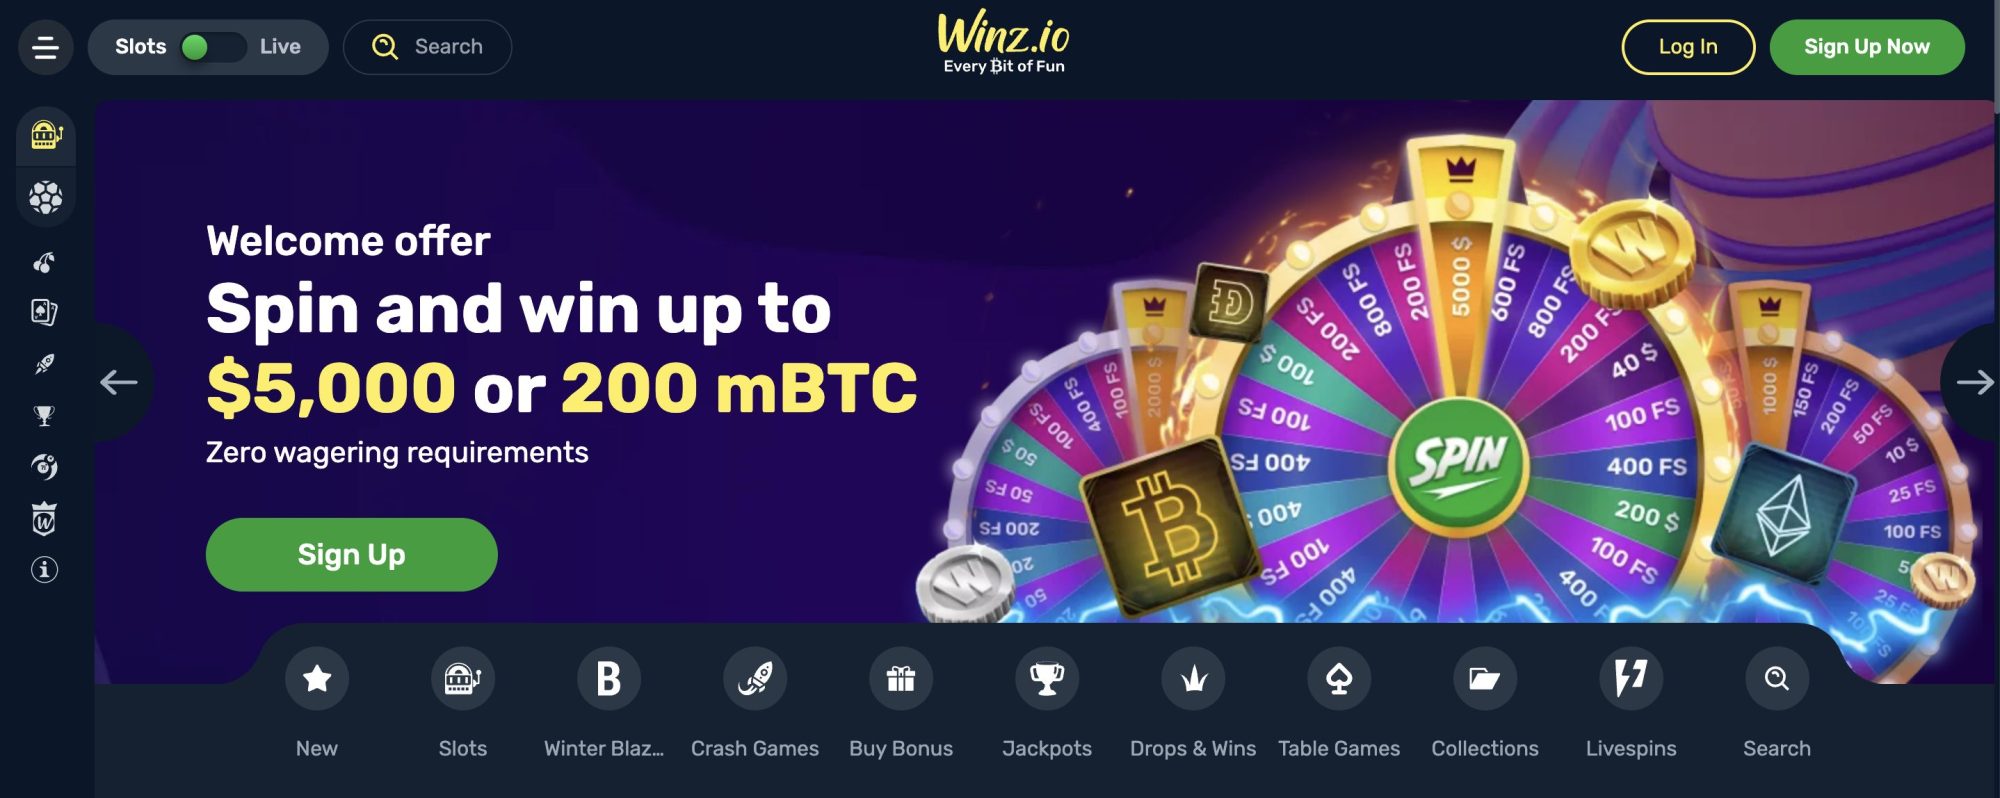 Winz.io crypto casino welcome offer